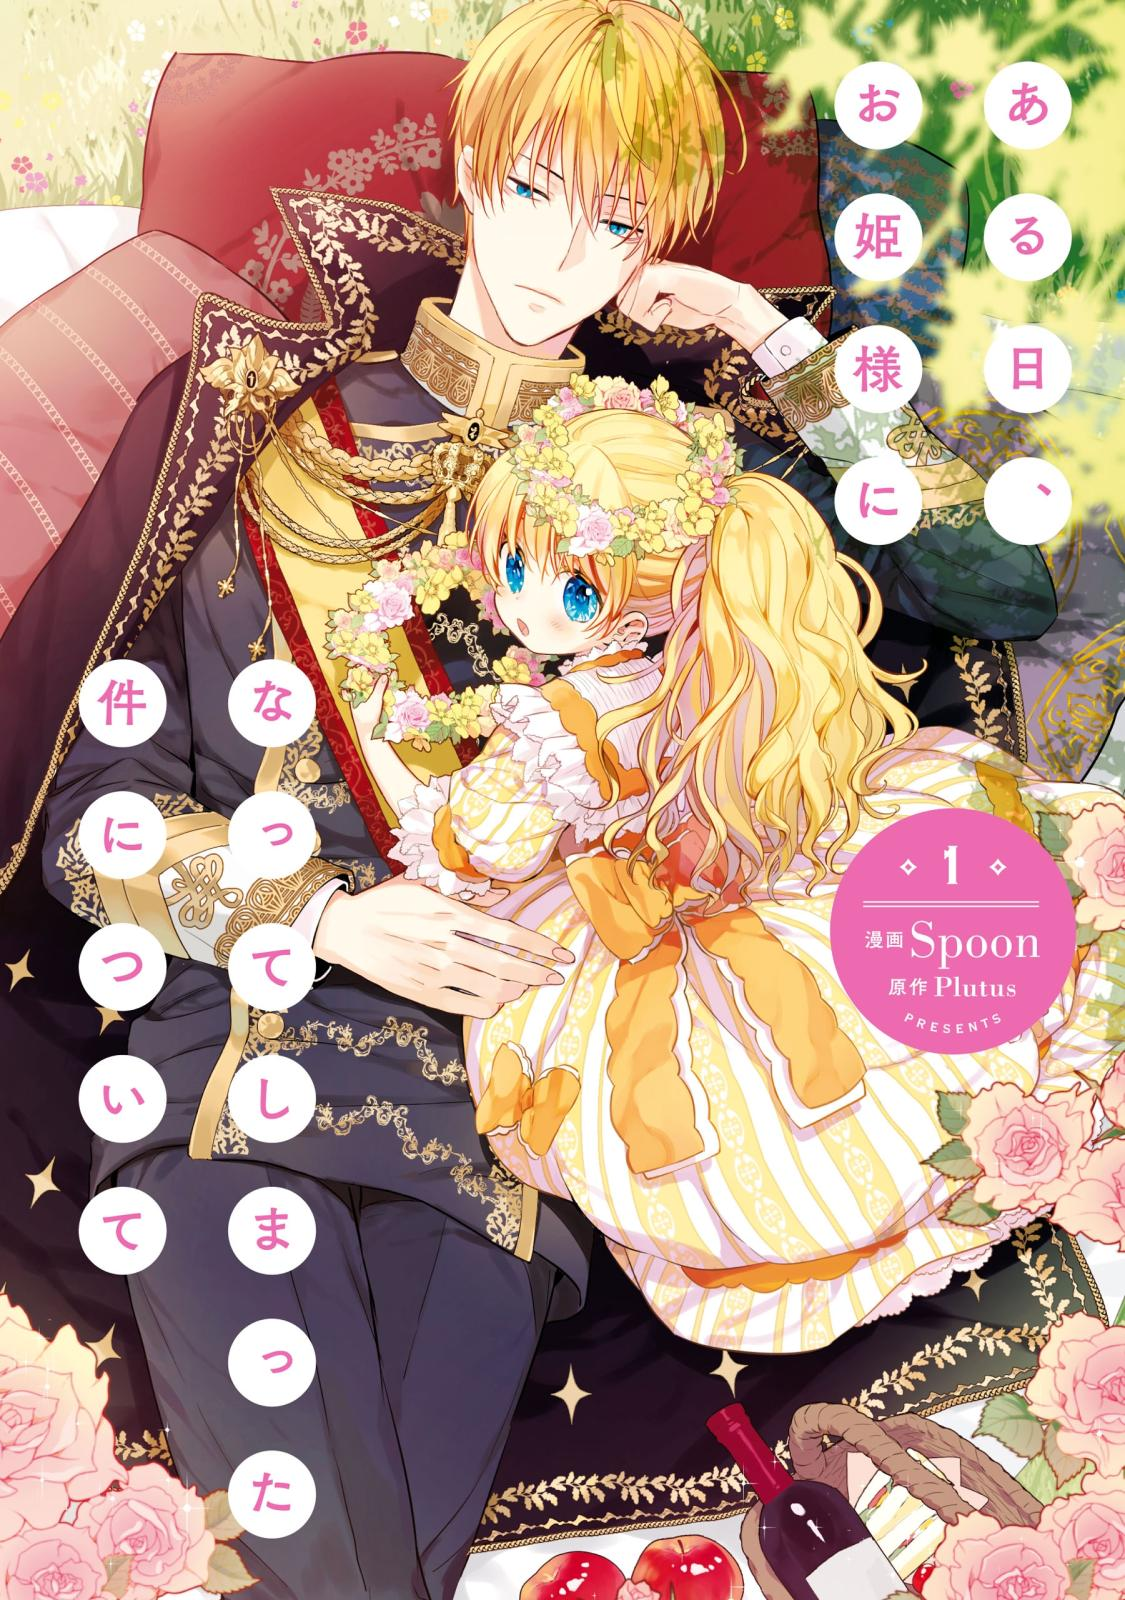 Suddenly Became A Princess One Day manga volume 1 cover